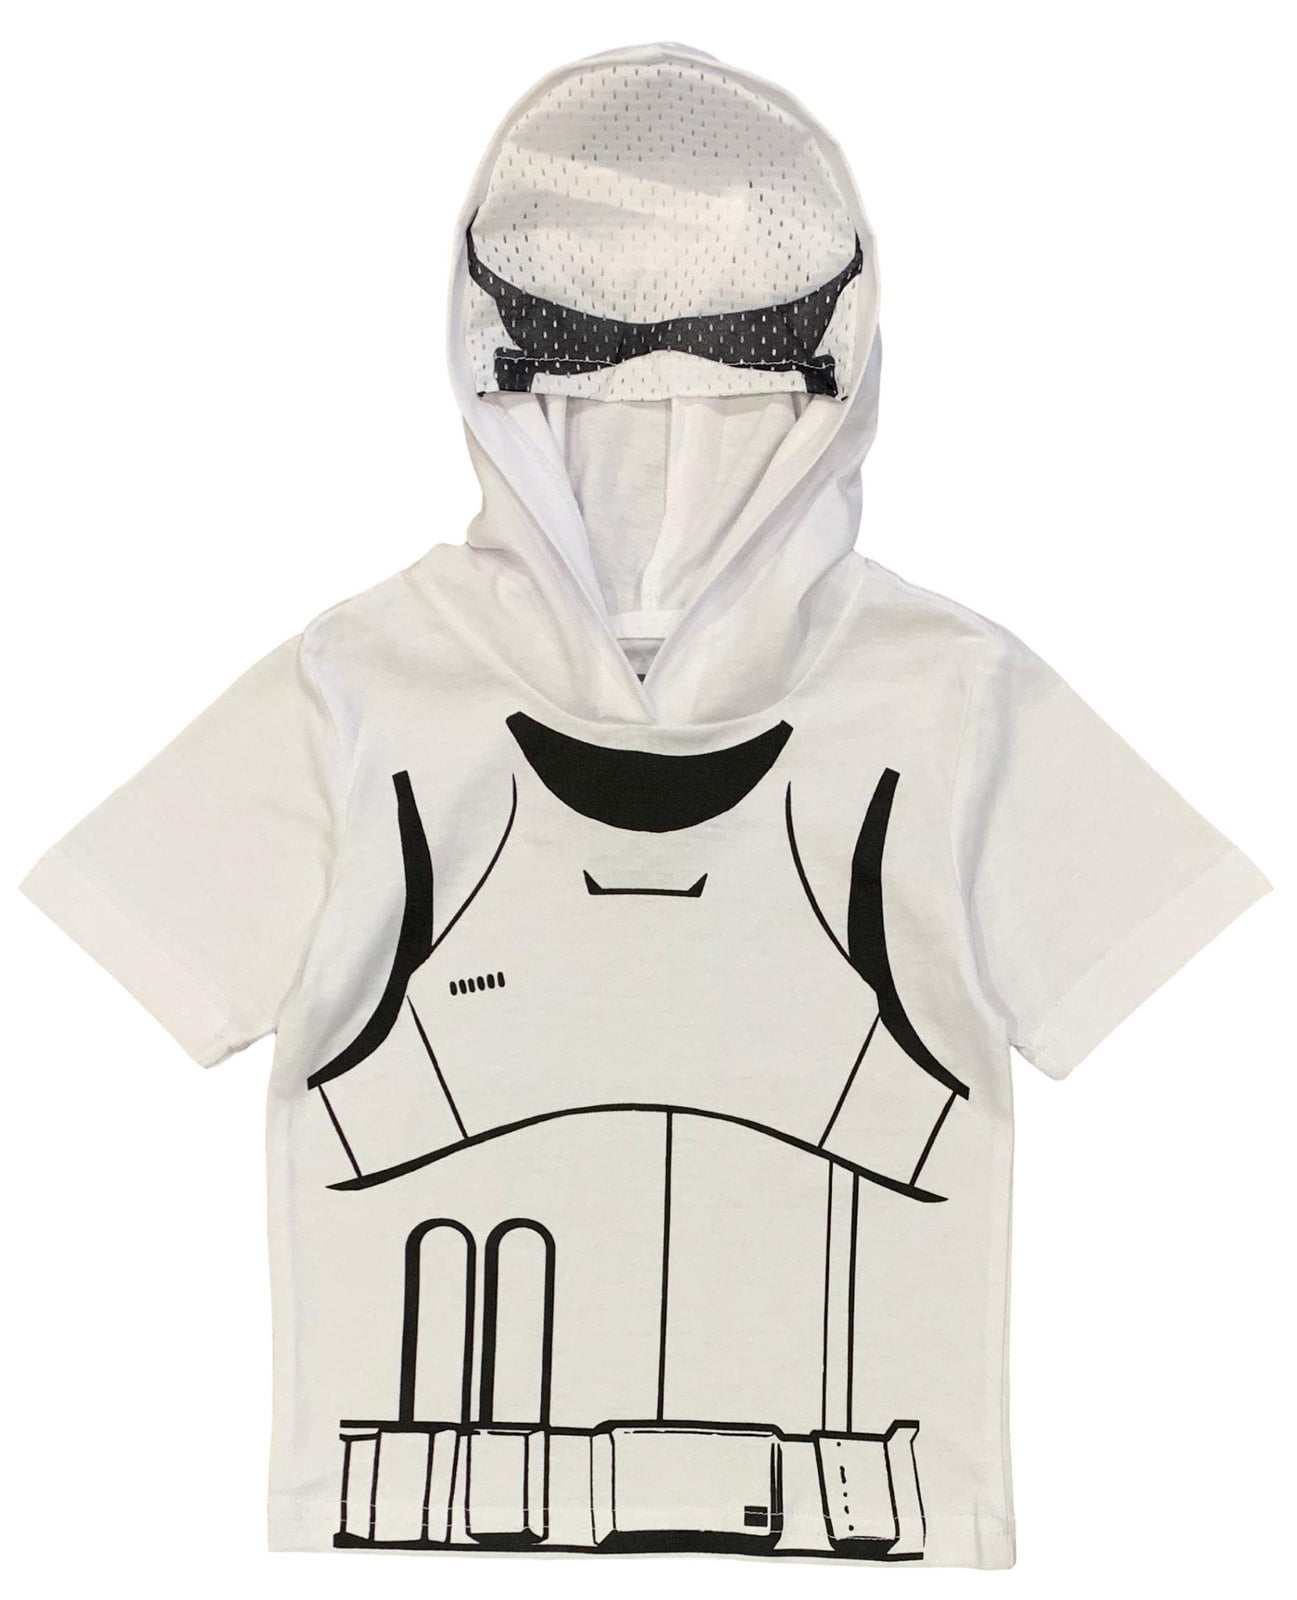 Star Wars Little Boys Hooded Costume Tee 